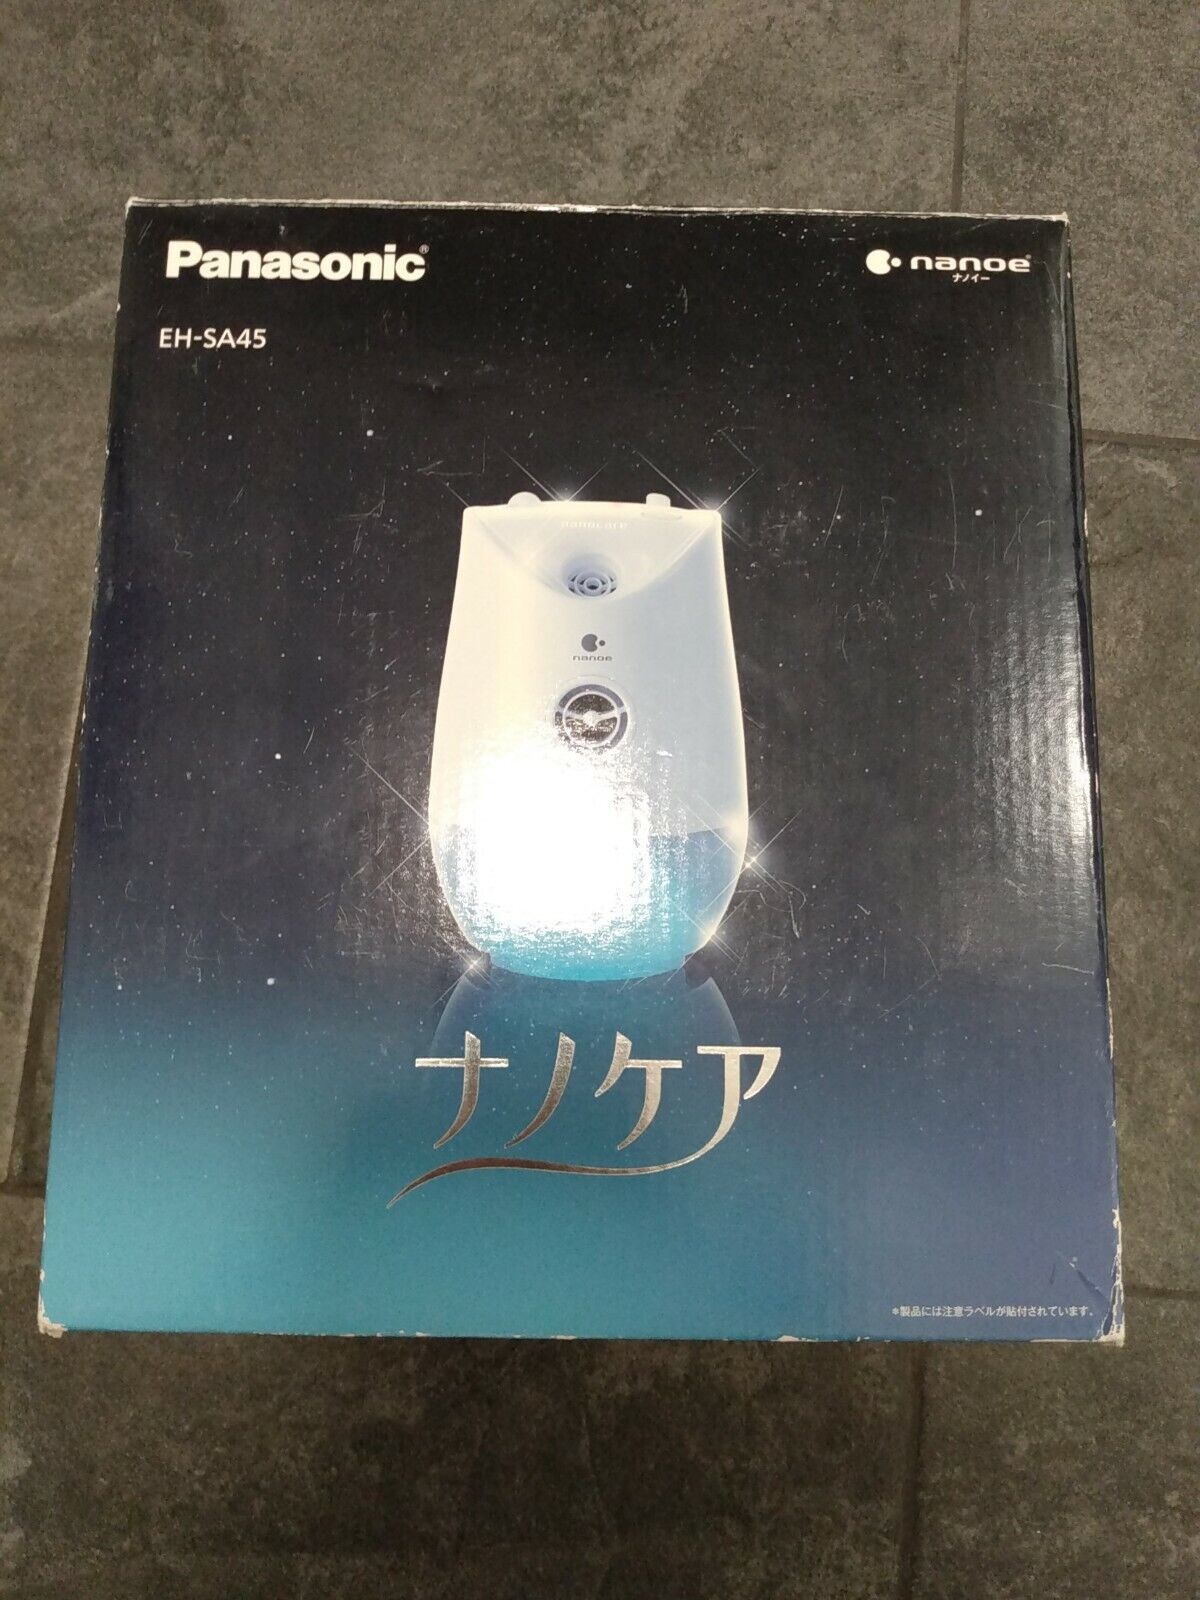 Panasonic NanoCare EH-SA45 Steamer (Japanese Import) New